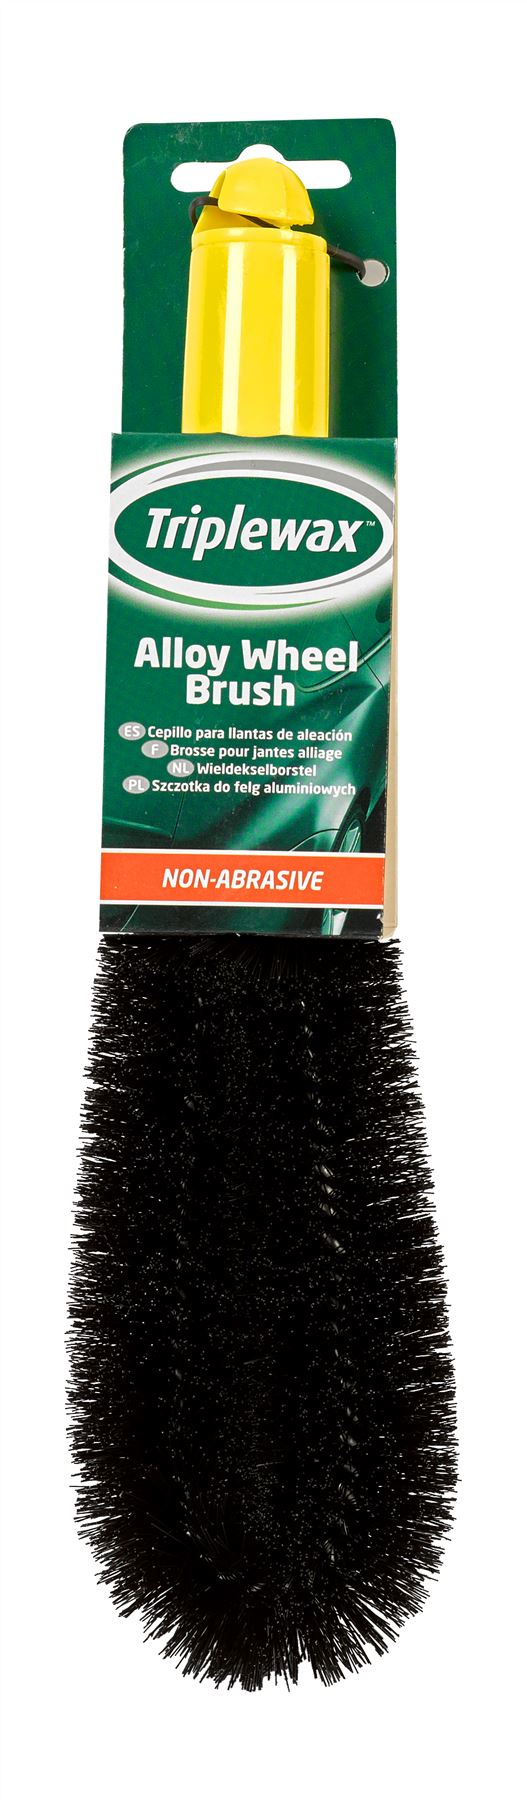 Triplewax Alloy Wheel Brush